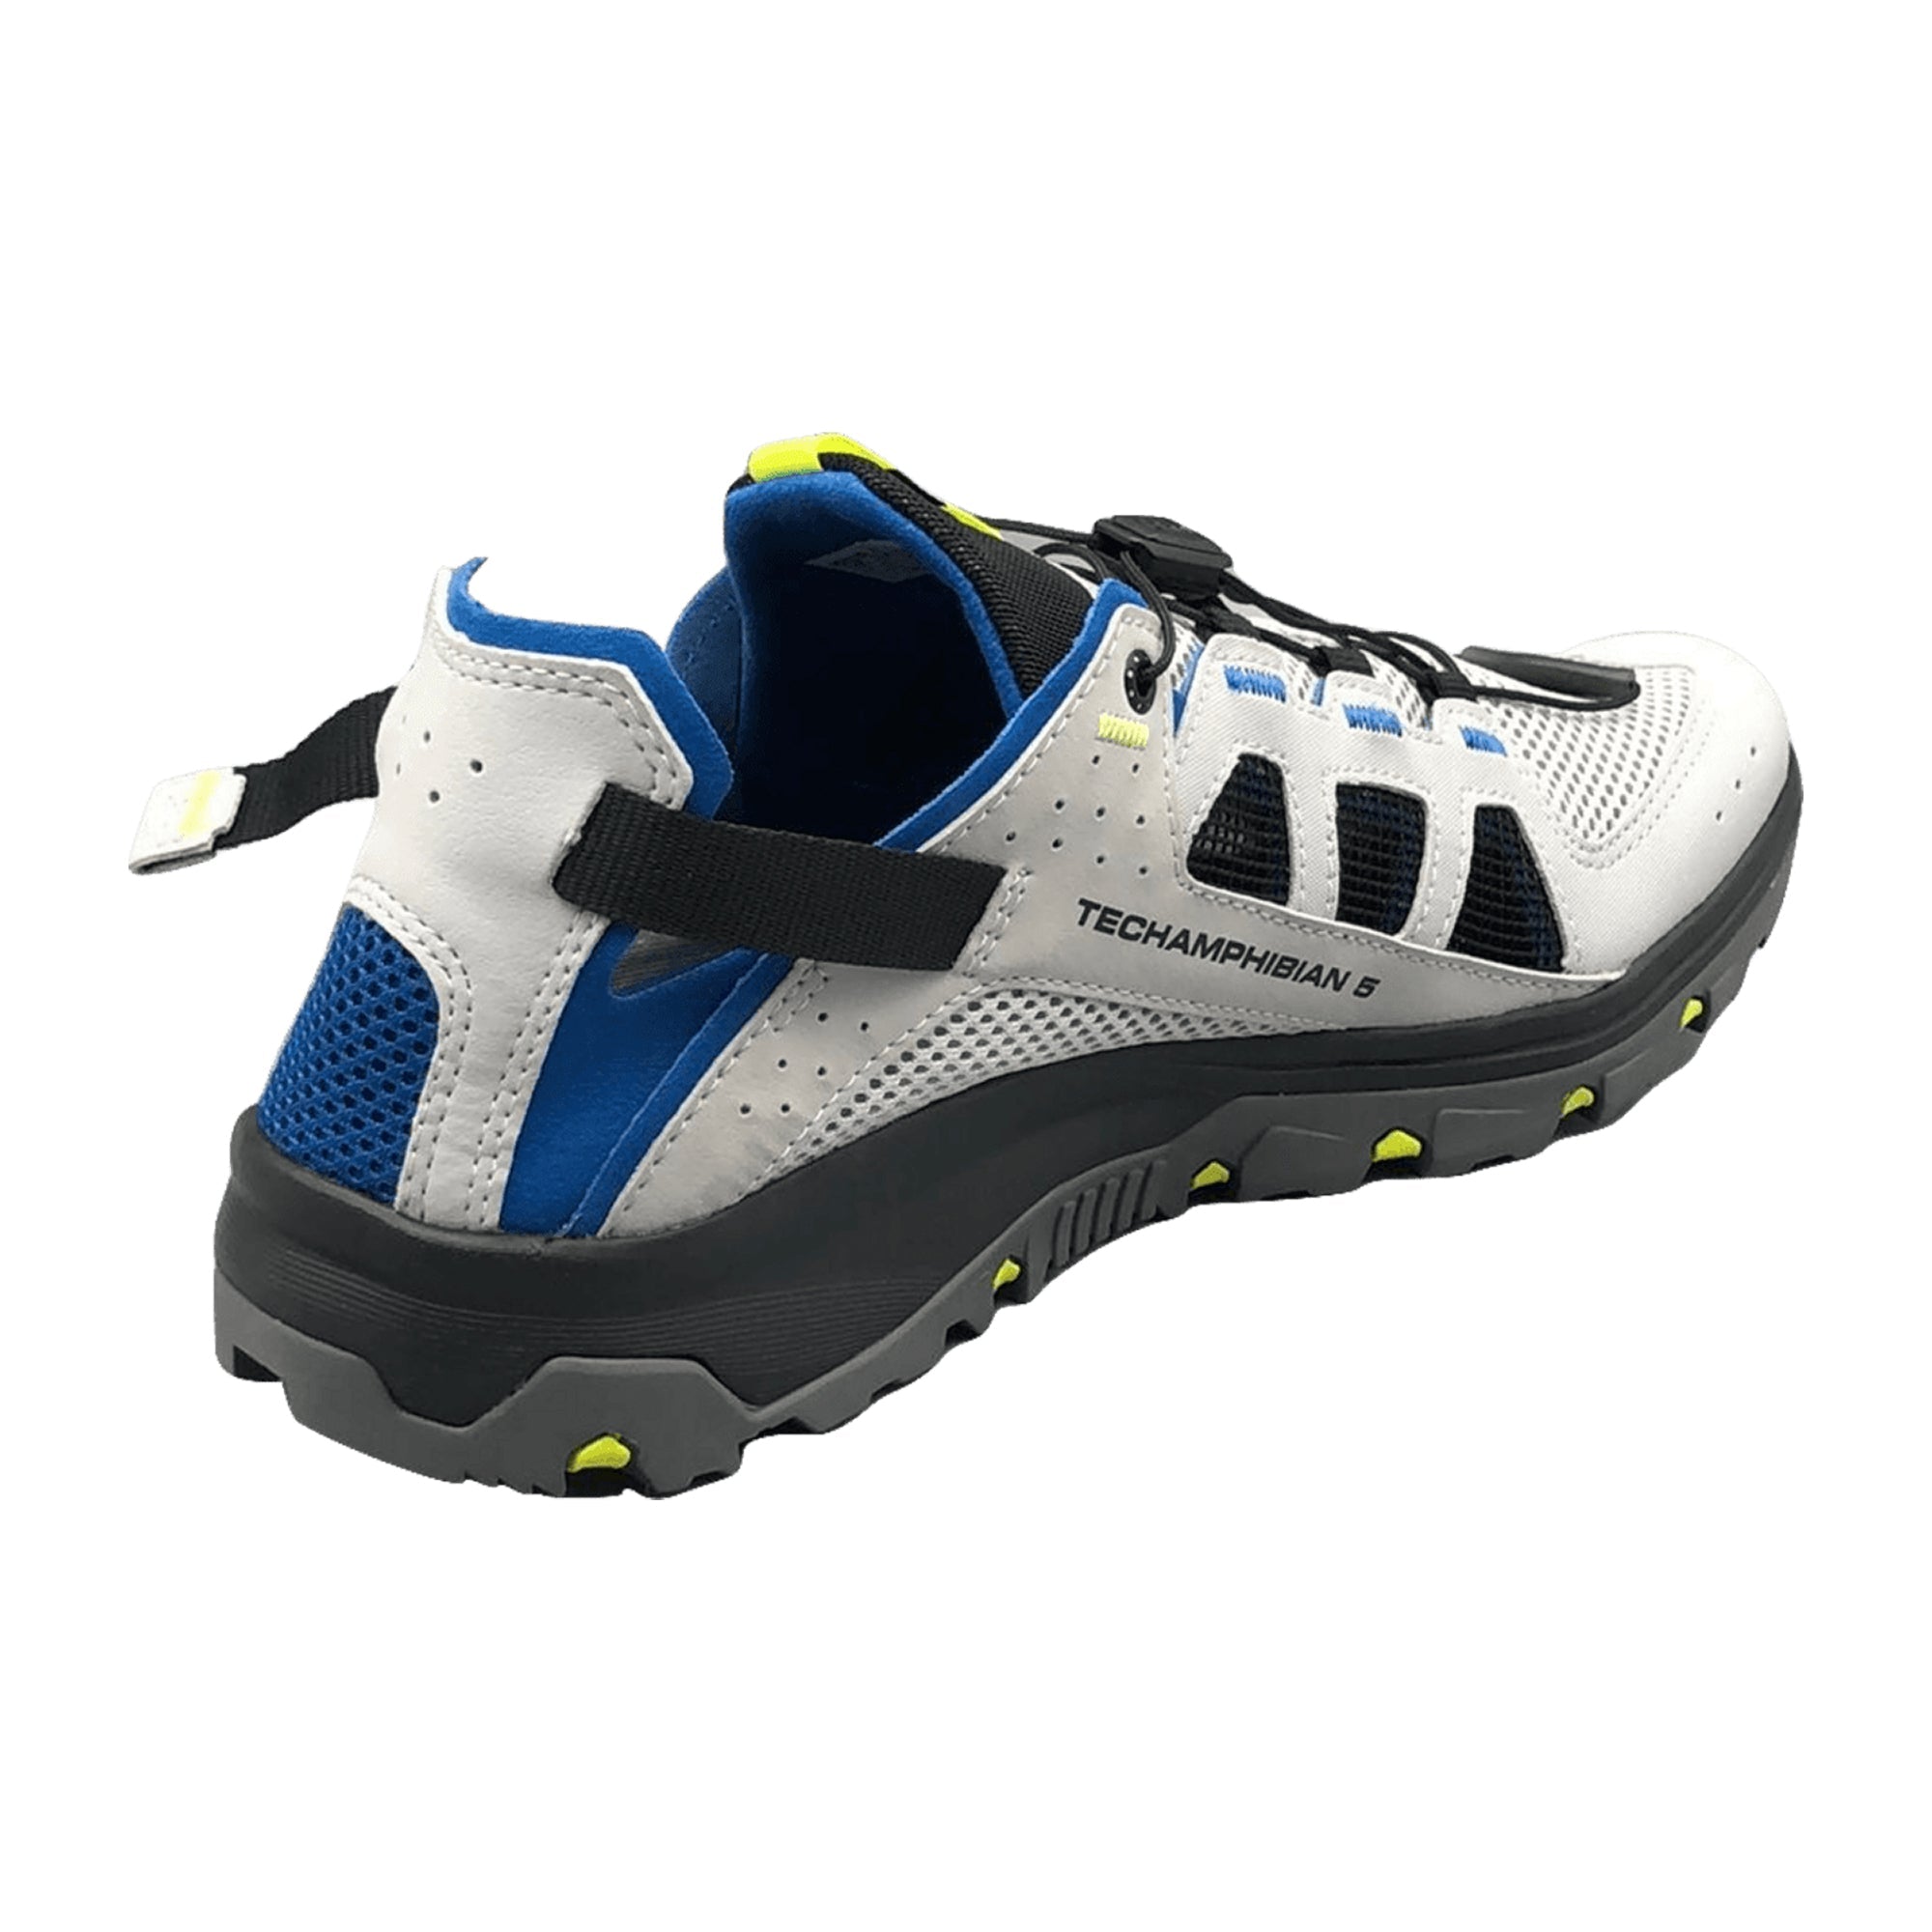 Salomon Techamphibian 5 for men, gray, shoes